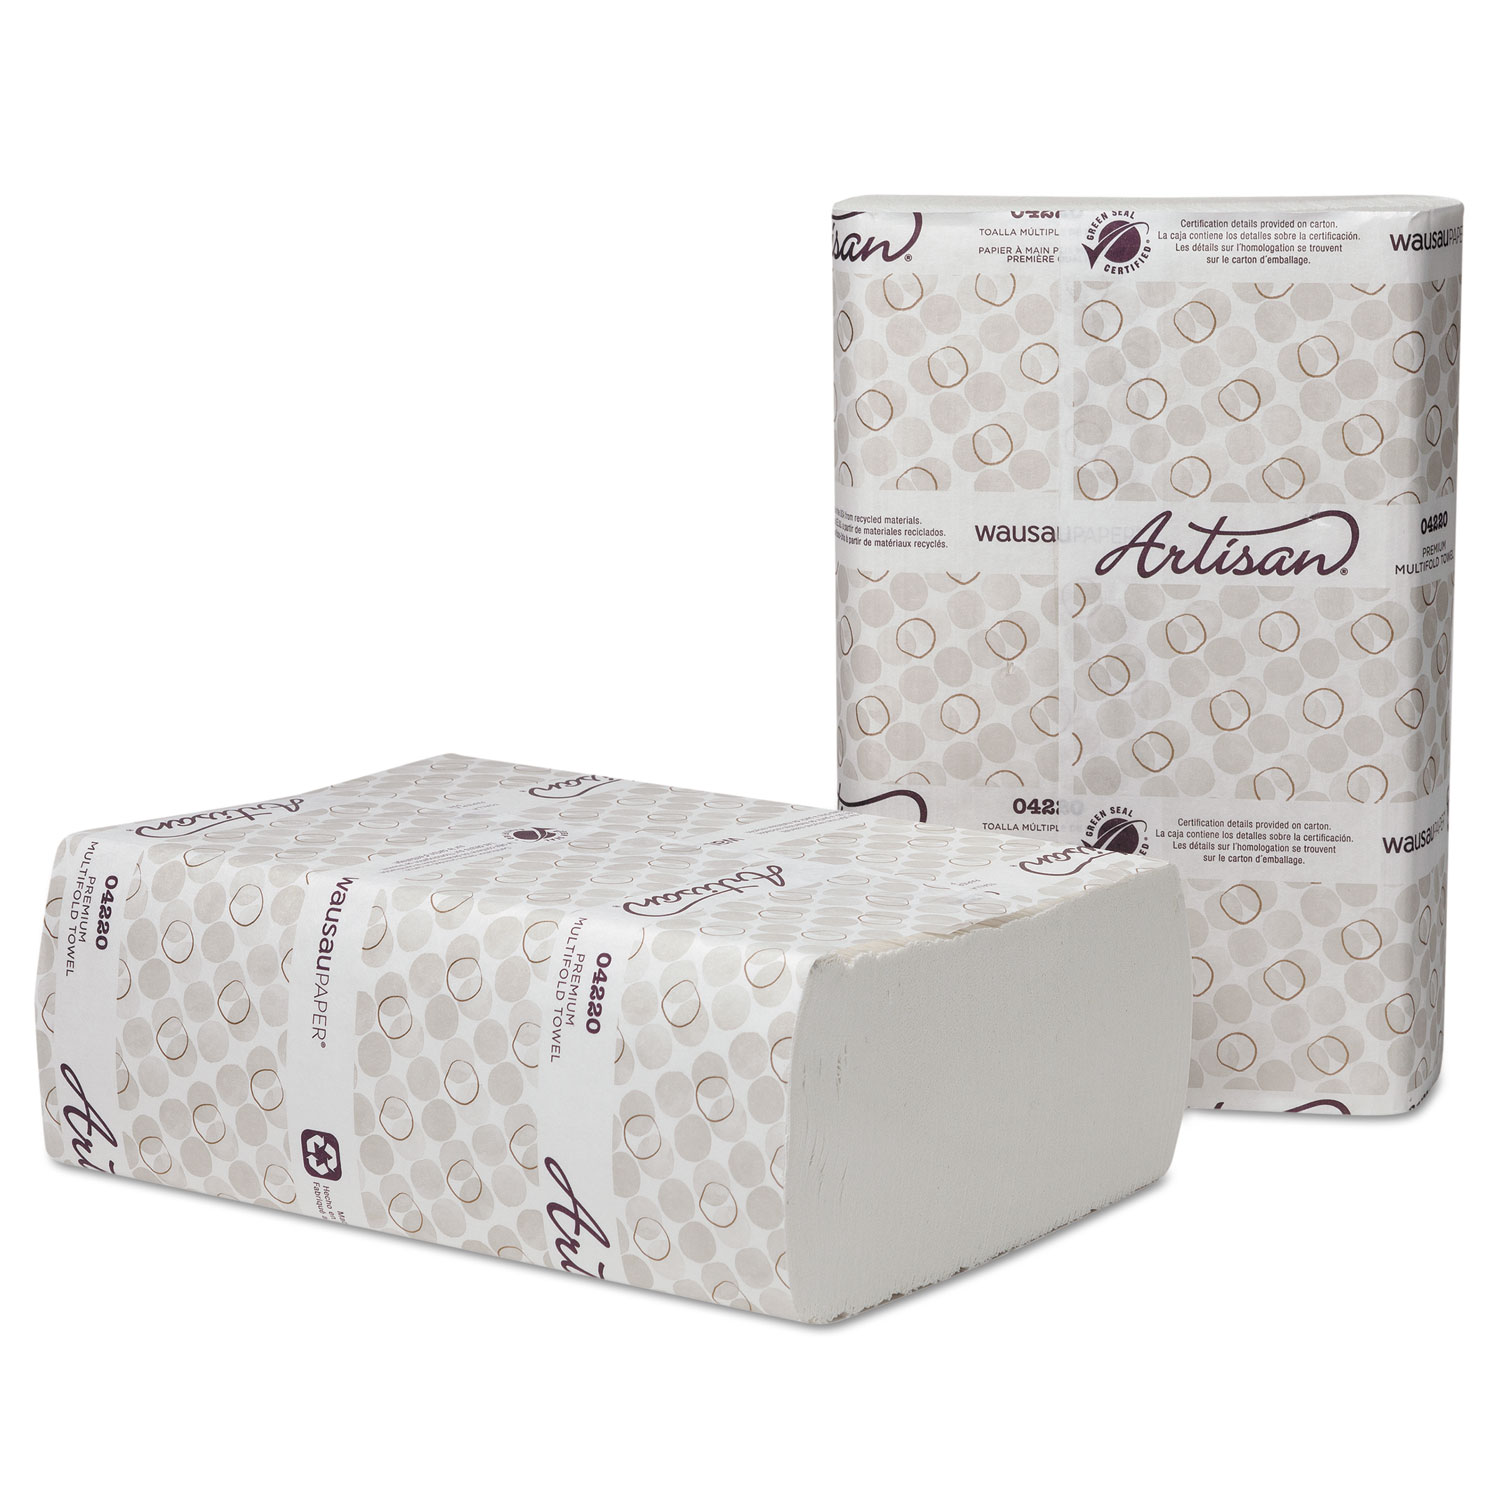 Artisan Folded Towels, Multi-Fold,9 1/8x9 1/2, White, 250/Pack,12 Pack/Carton